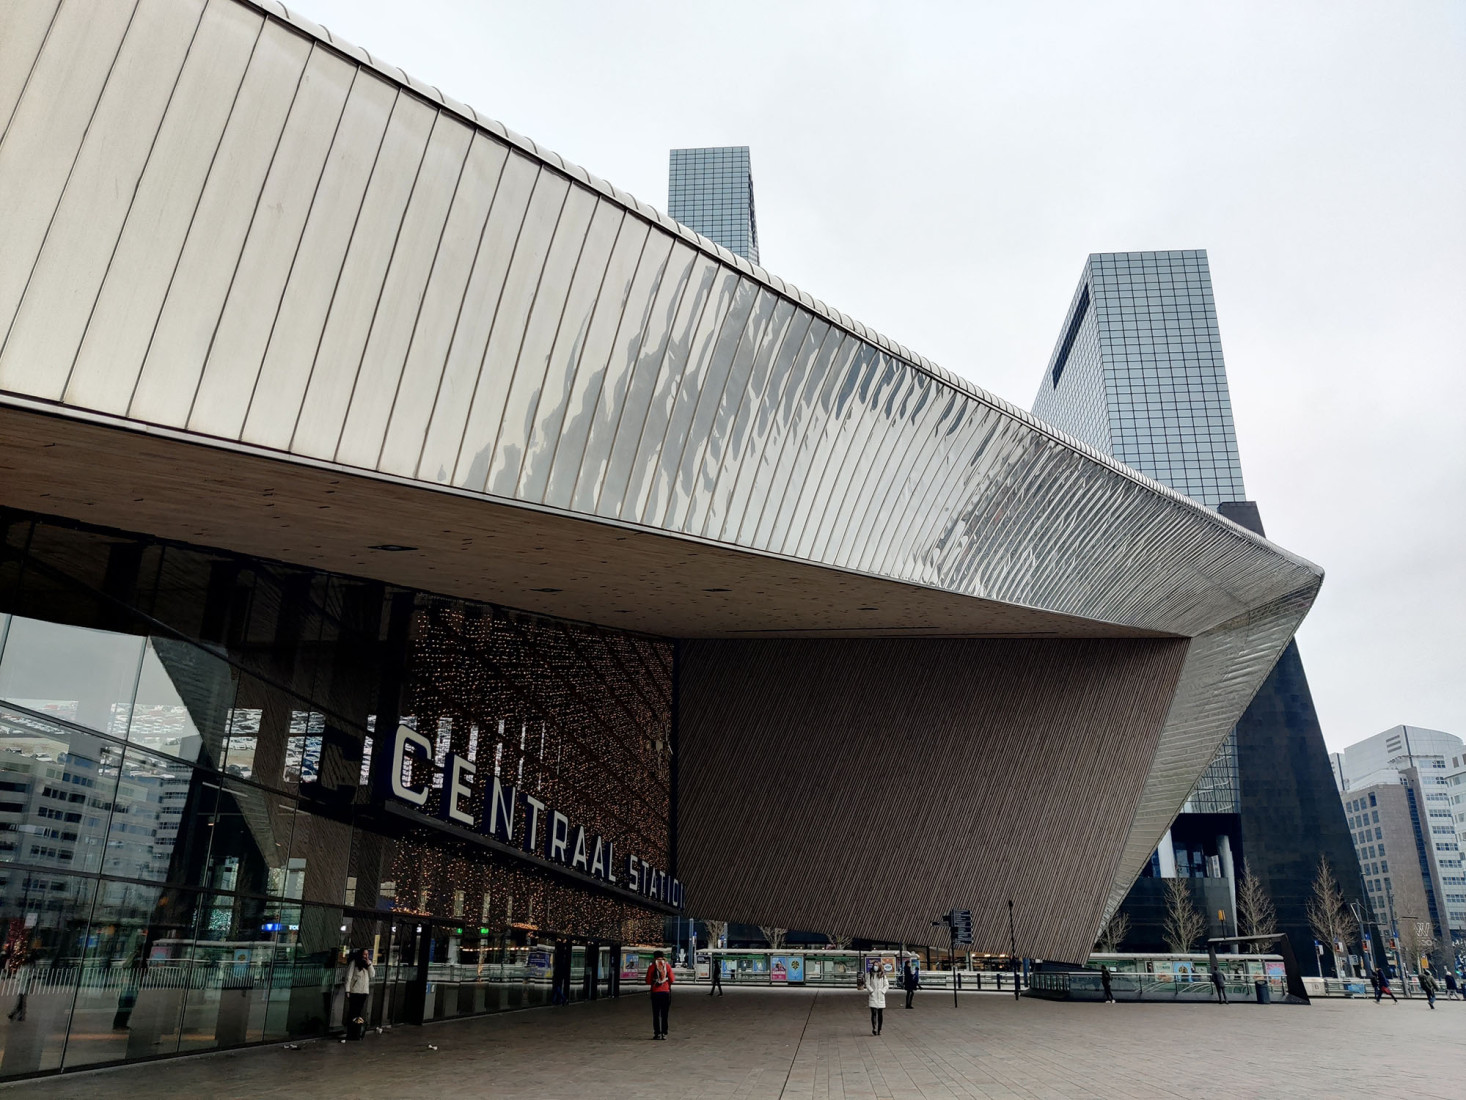 Rotterdam Centraal station